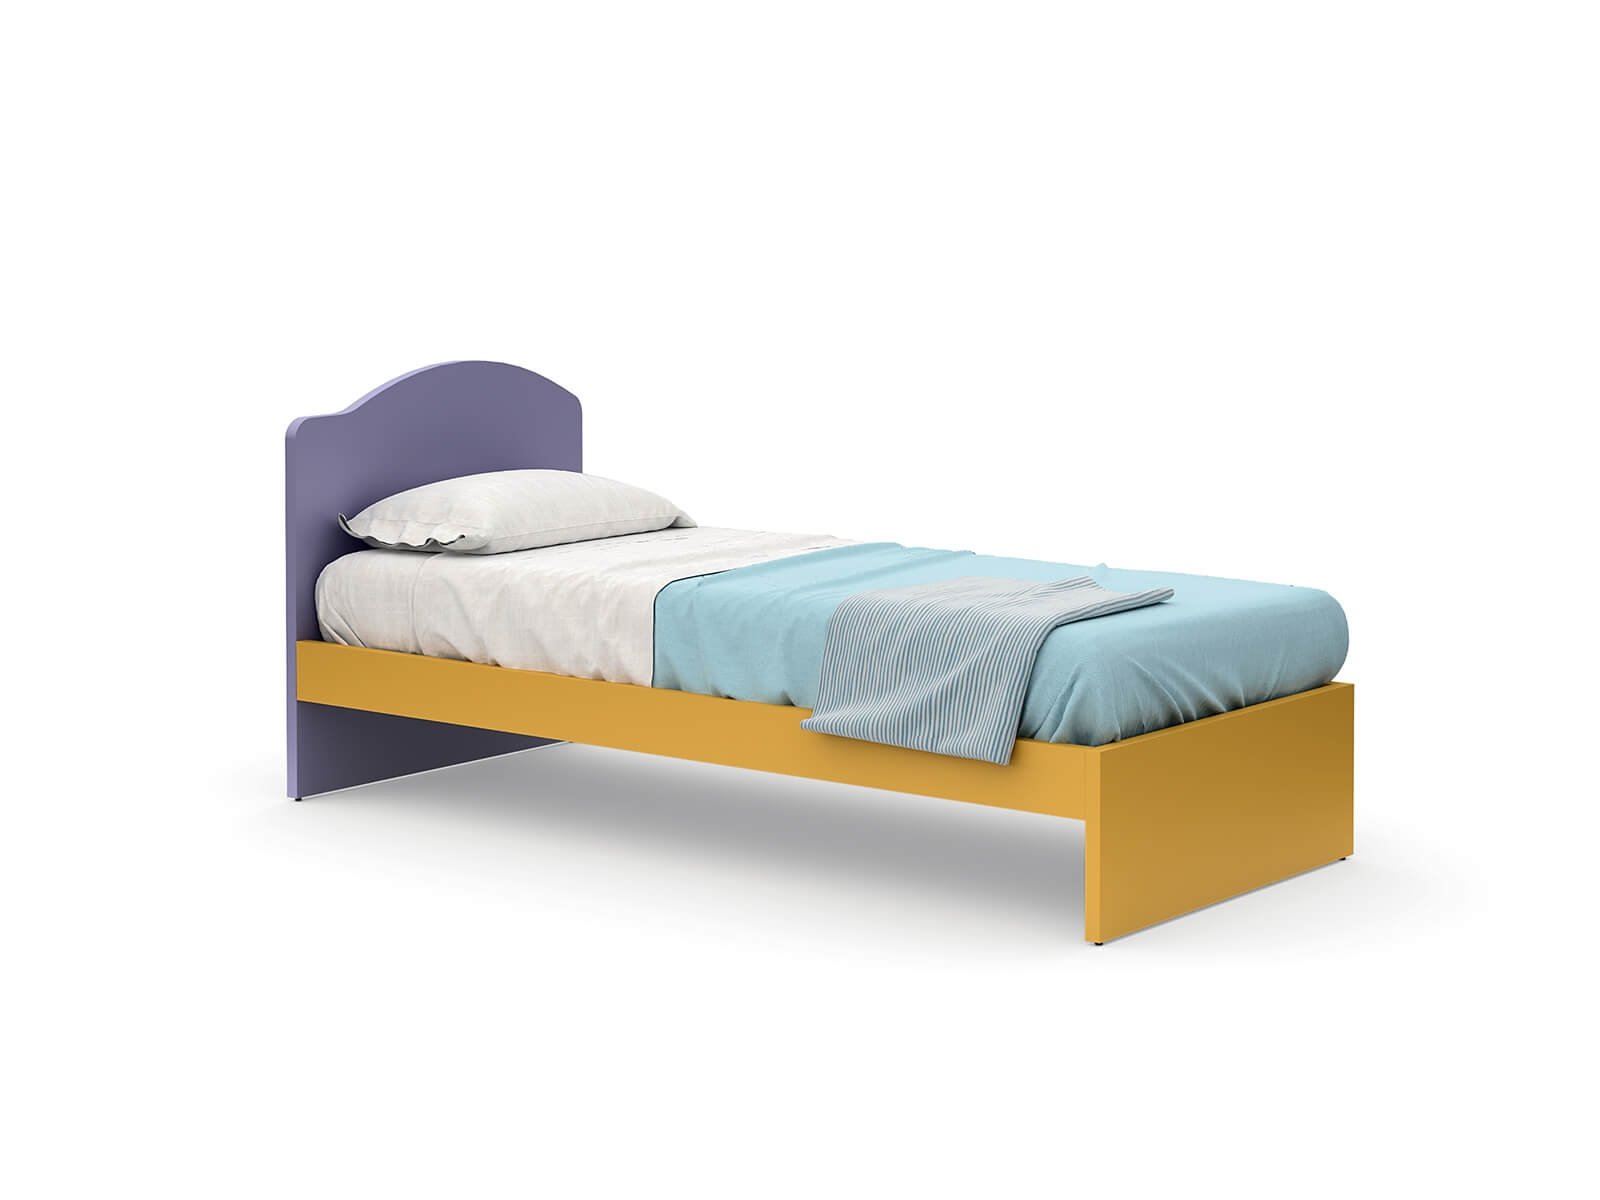 Ola single bed